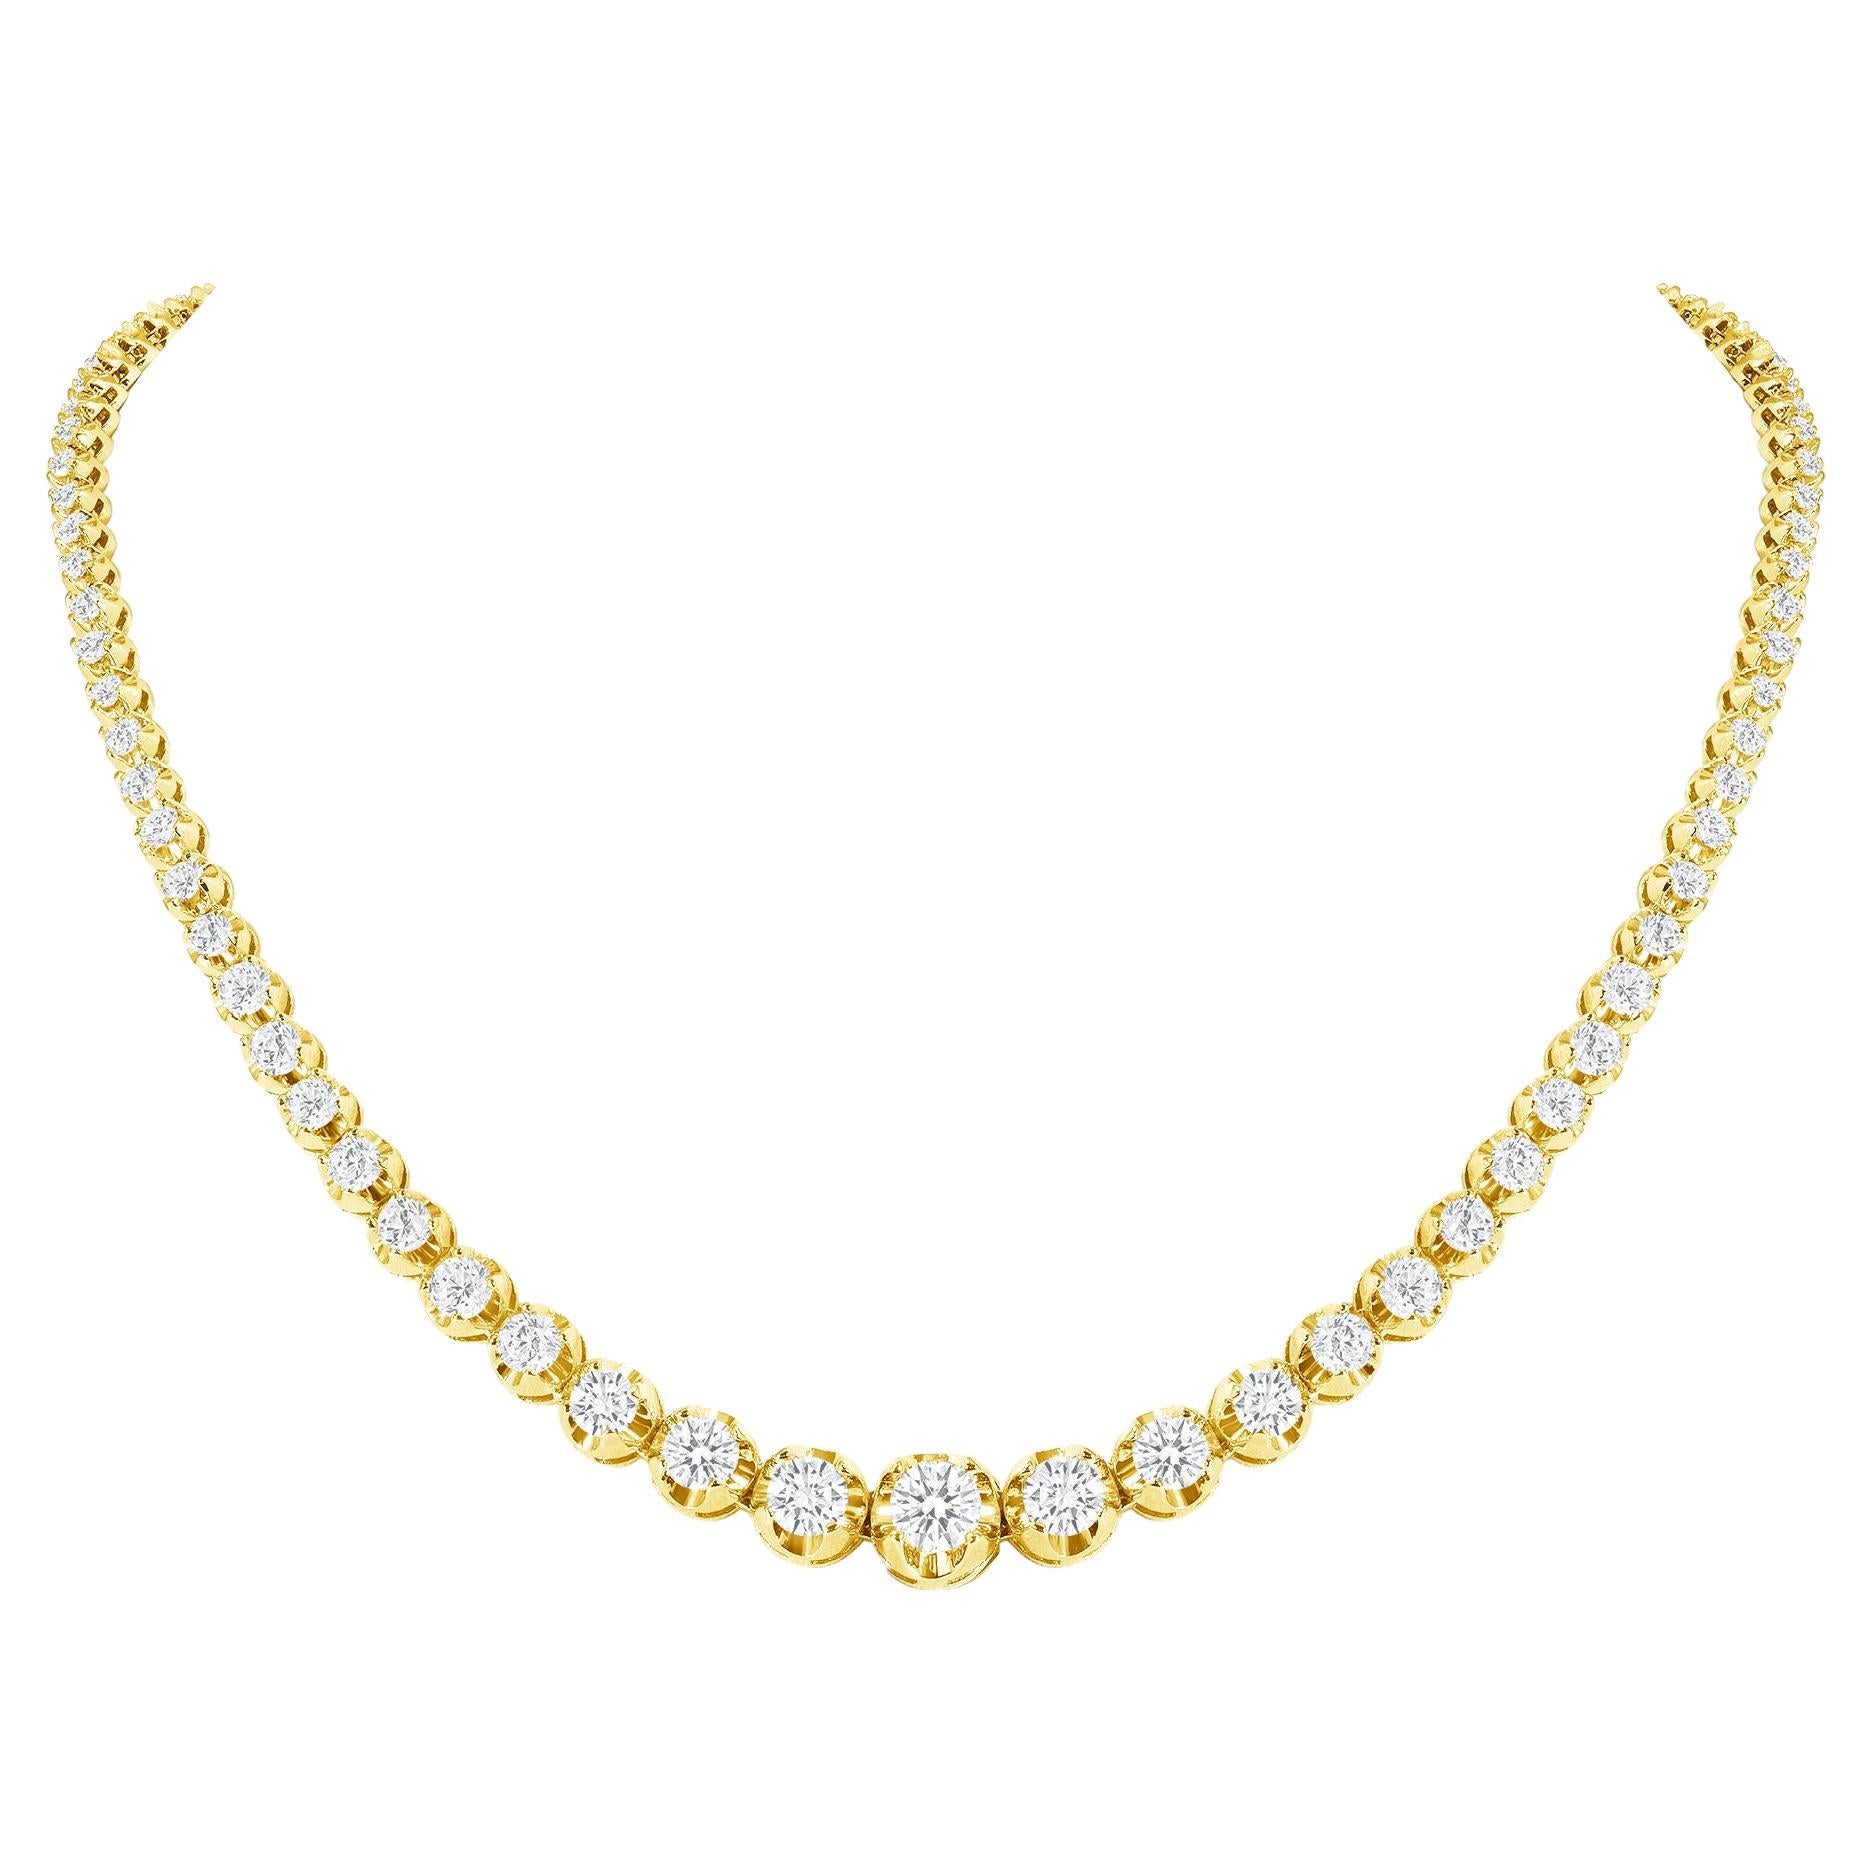 14k Yellow Gold 5 Carat Graduated Diamond Tennis Necklace Illusion Setting